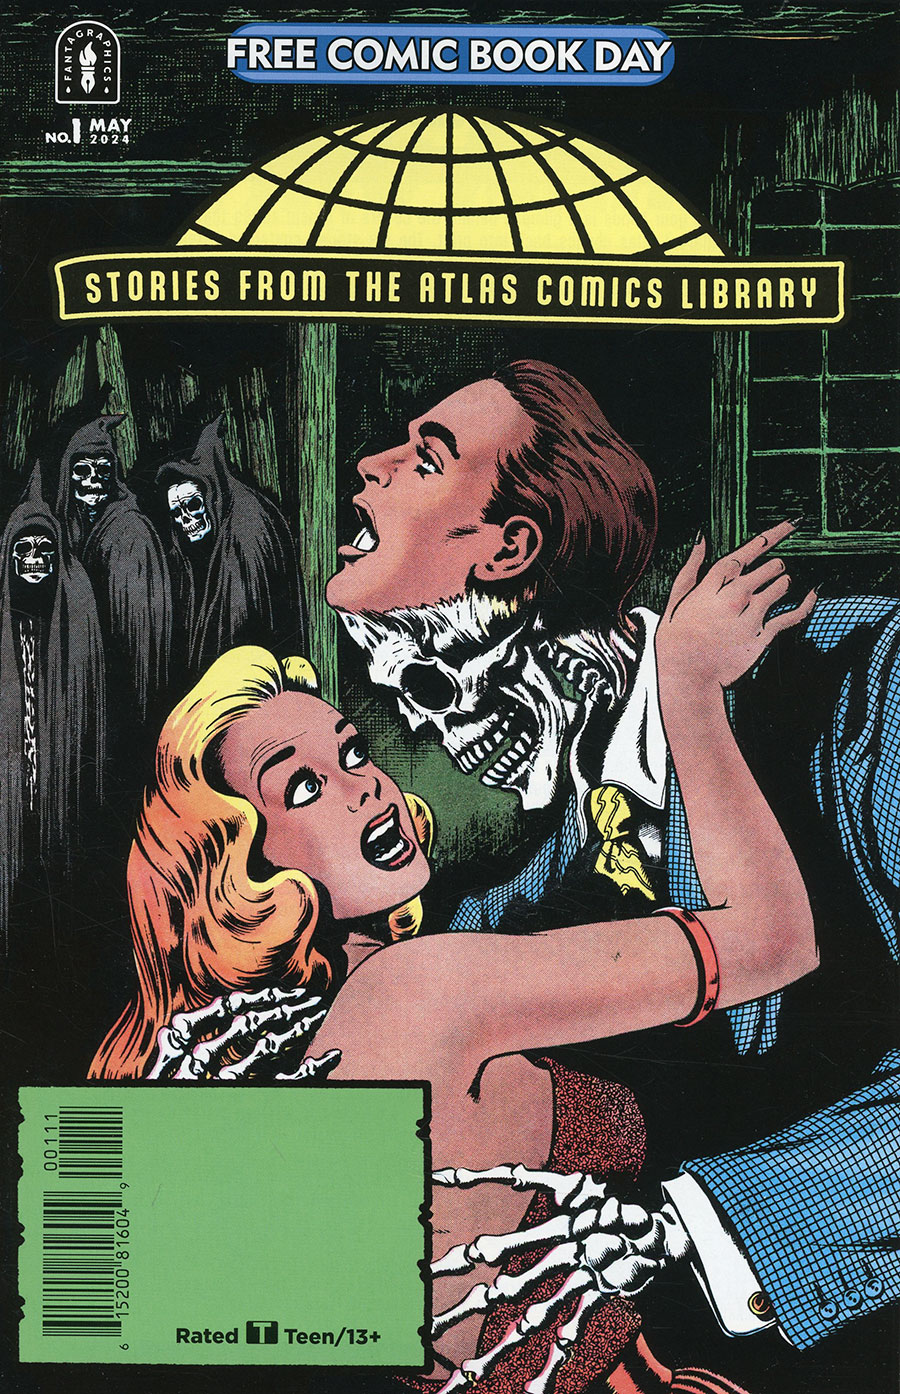 FCBD 2024 Marvel & Fantagraphics Present Stories From The Atlas Comics Library - FREE - Limit 1 Per Customer